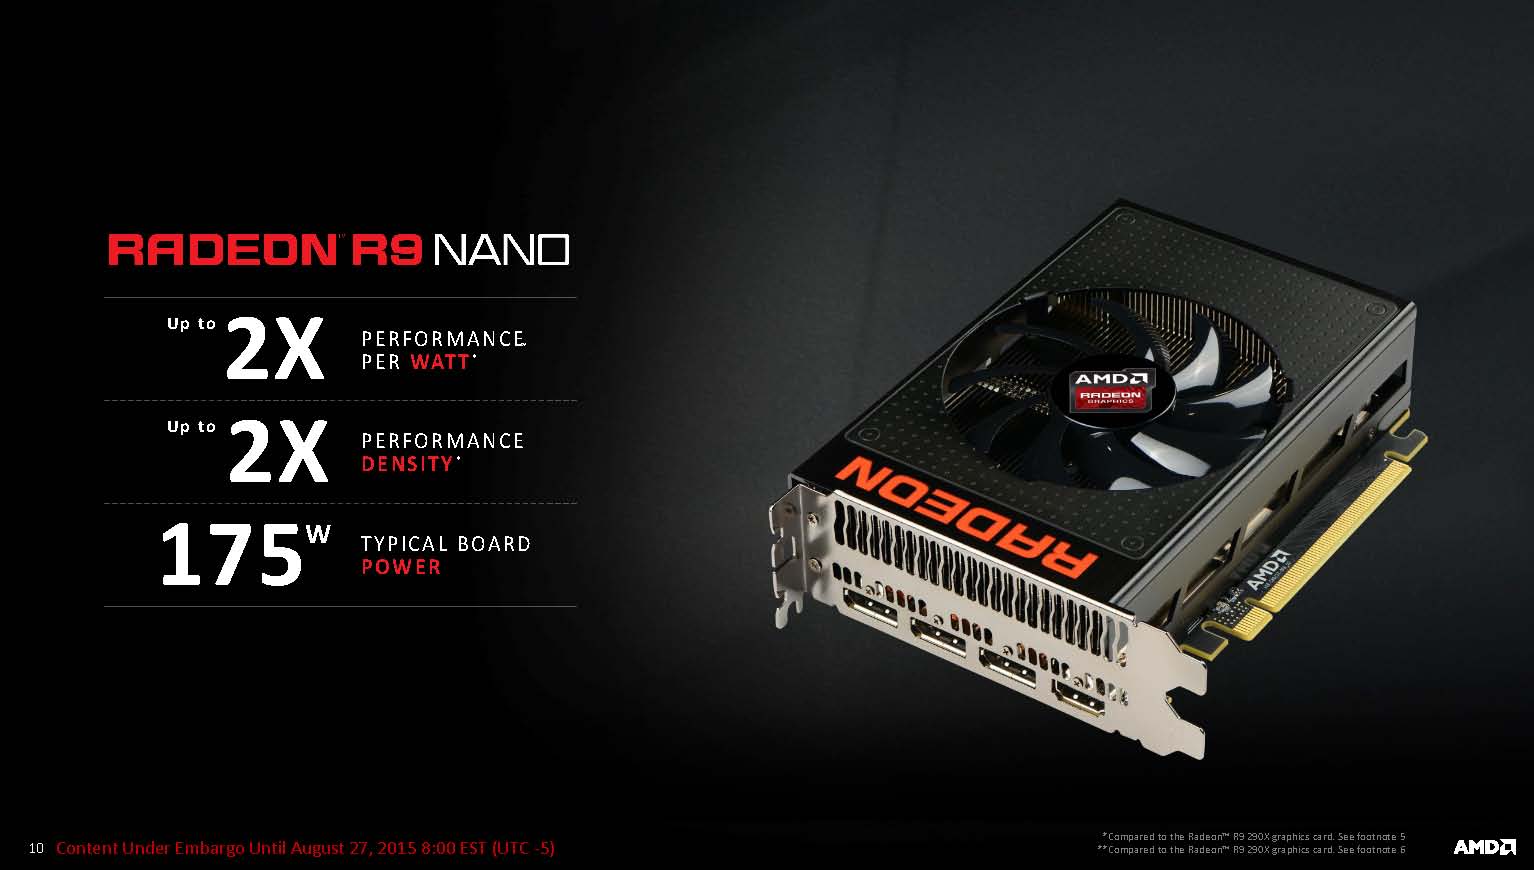 Introducing - the AMD Radeon R9 Nano